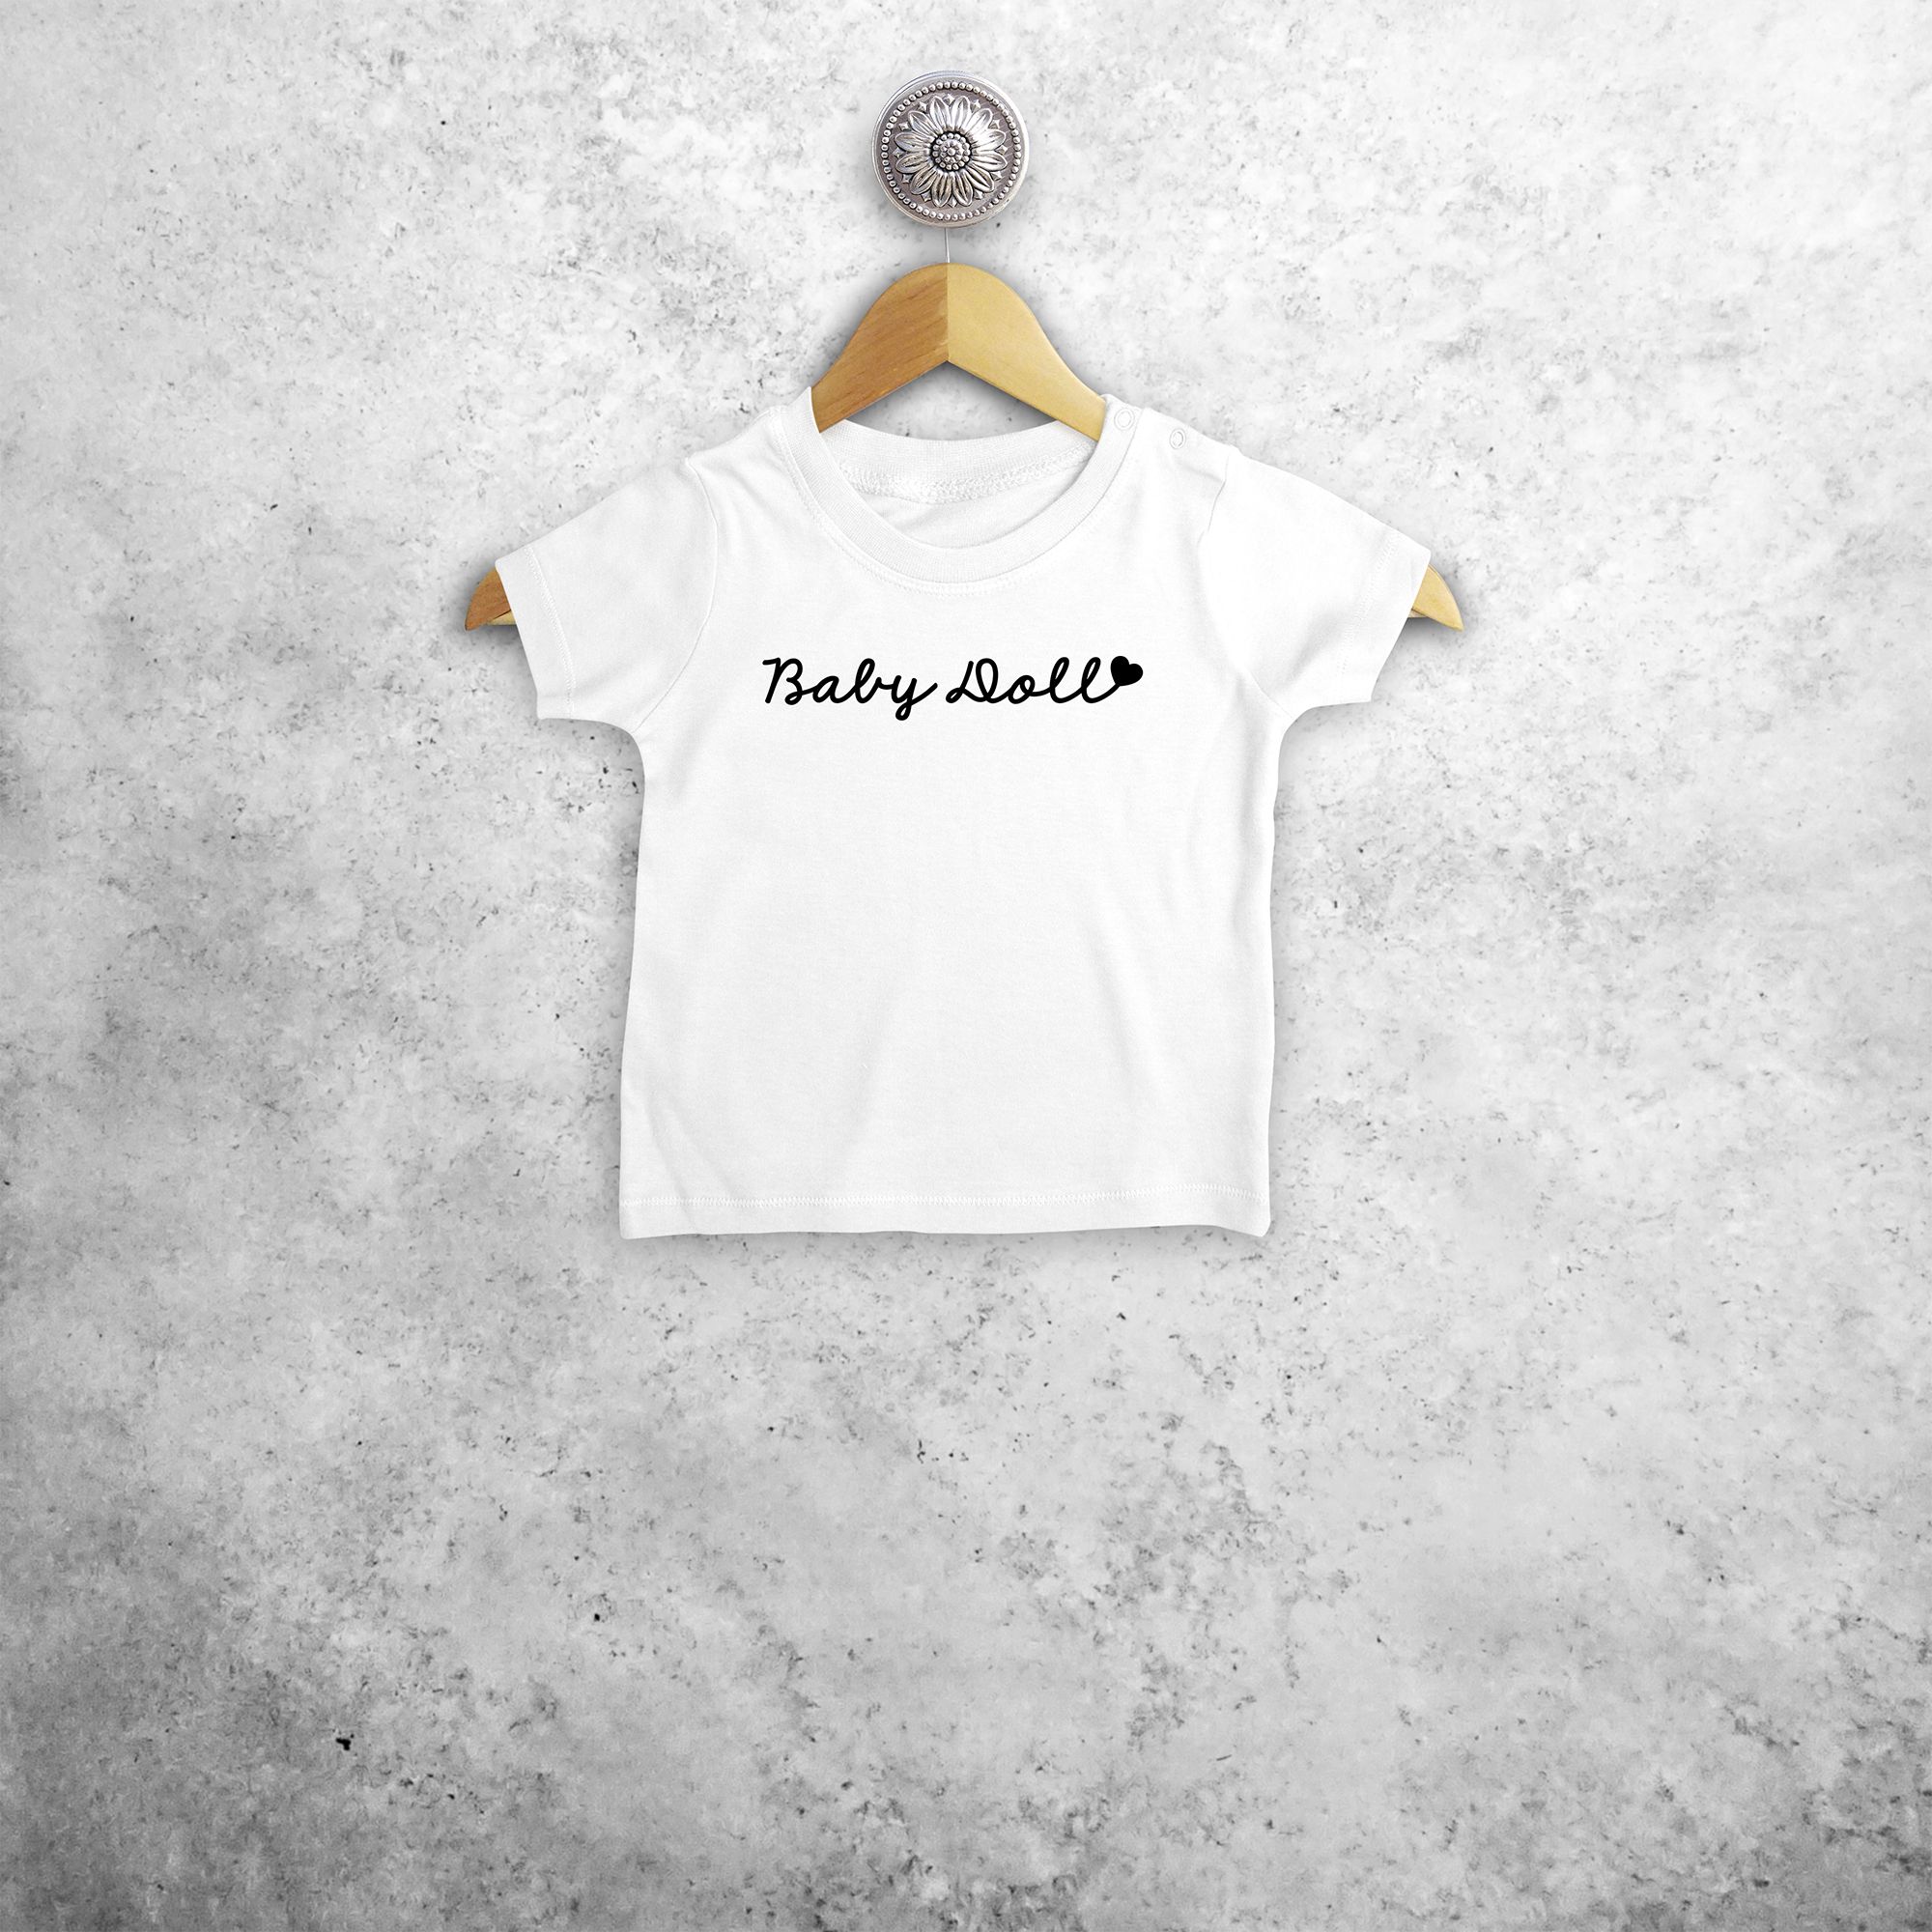 'Baby doll' baby shortsleeve shirt